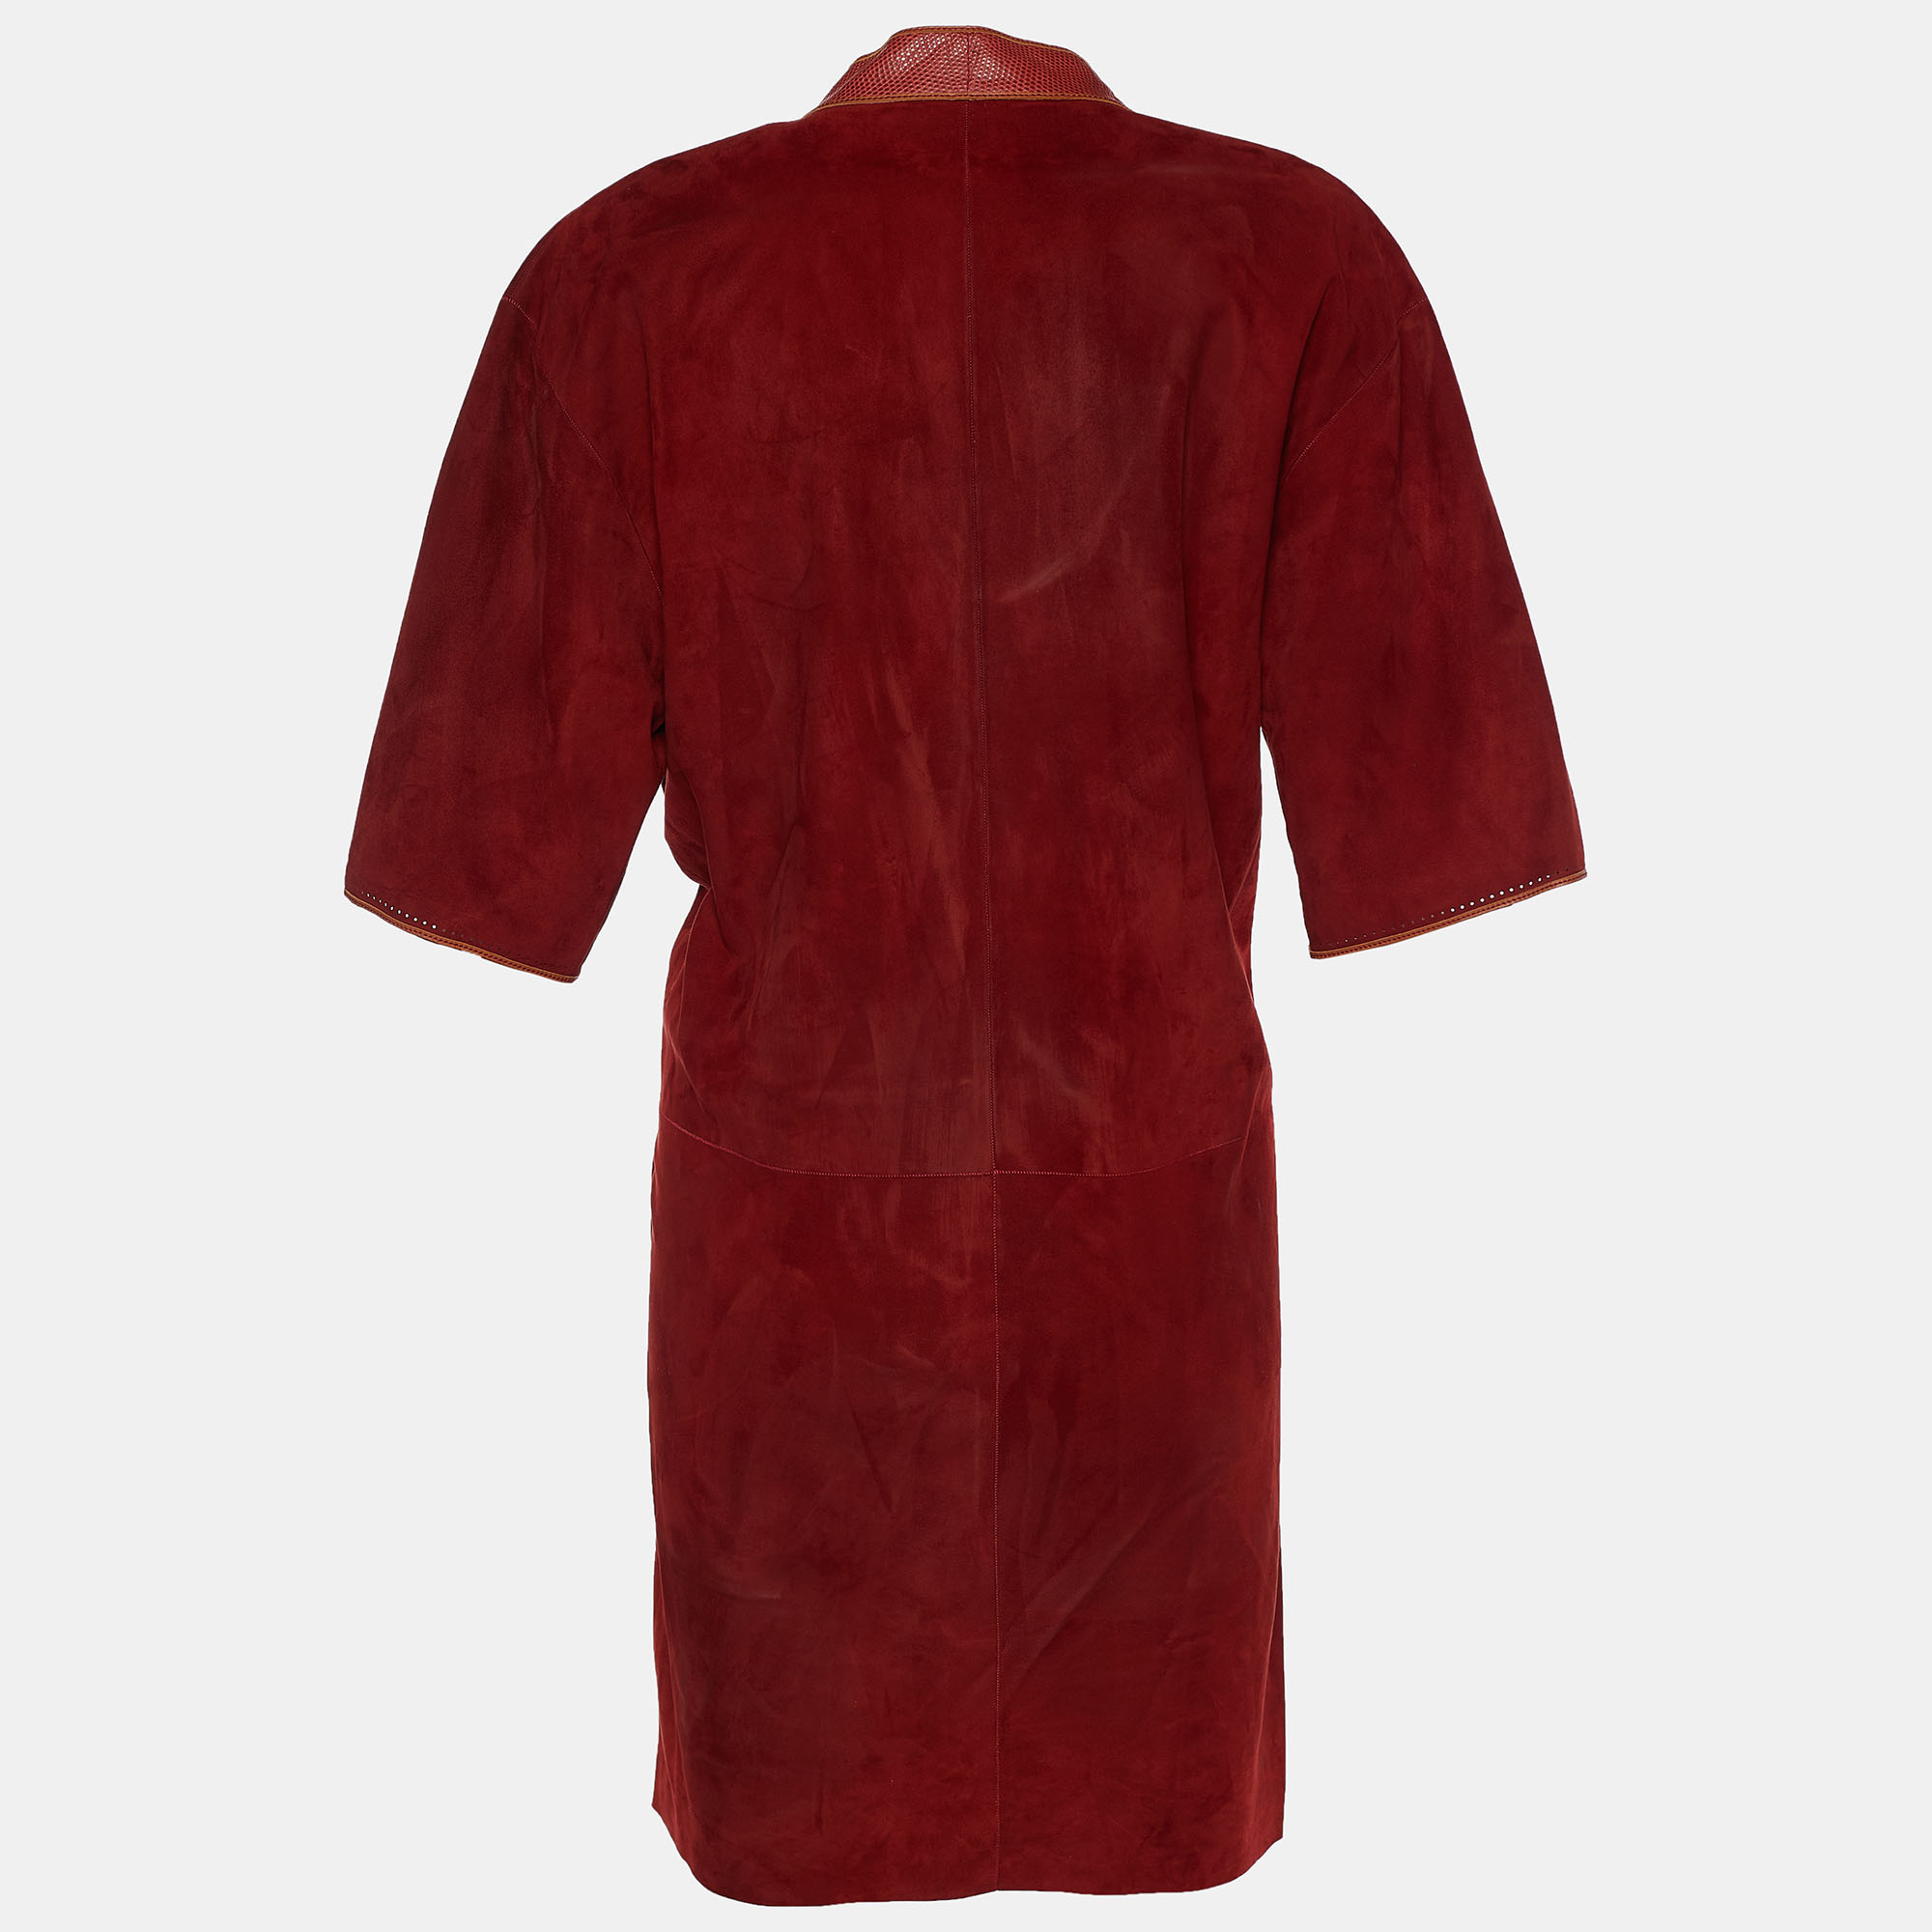 

Hermes Red Suede & Lizard Trim Detail Tunic Dress